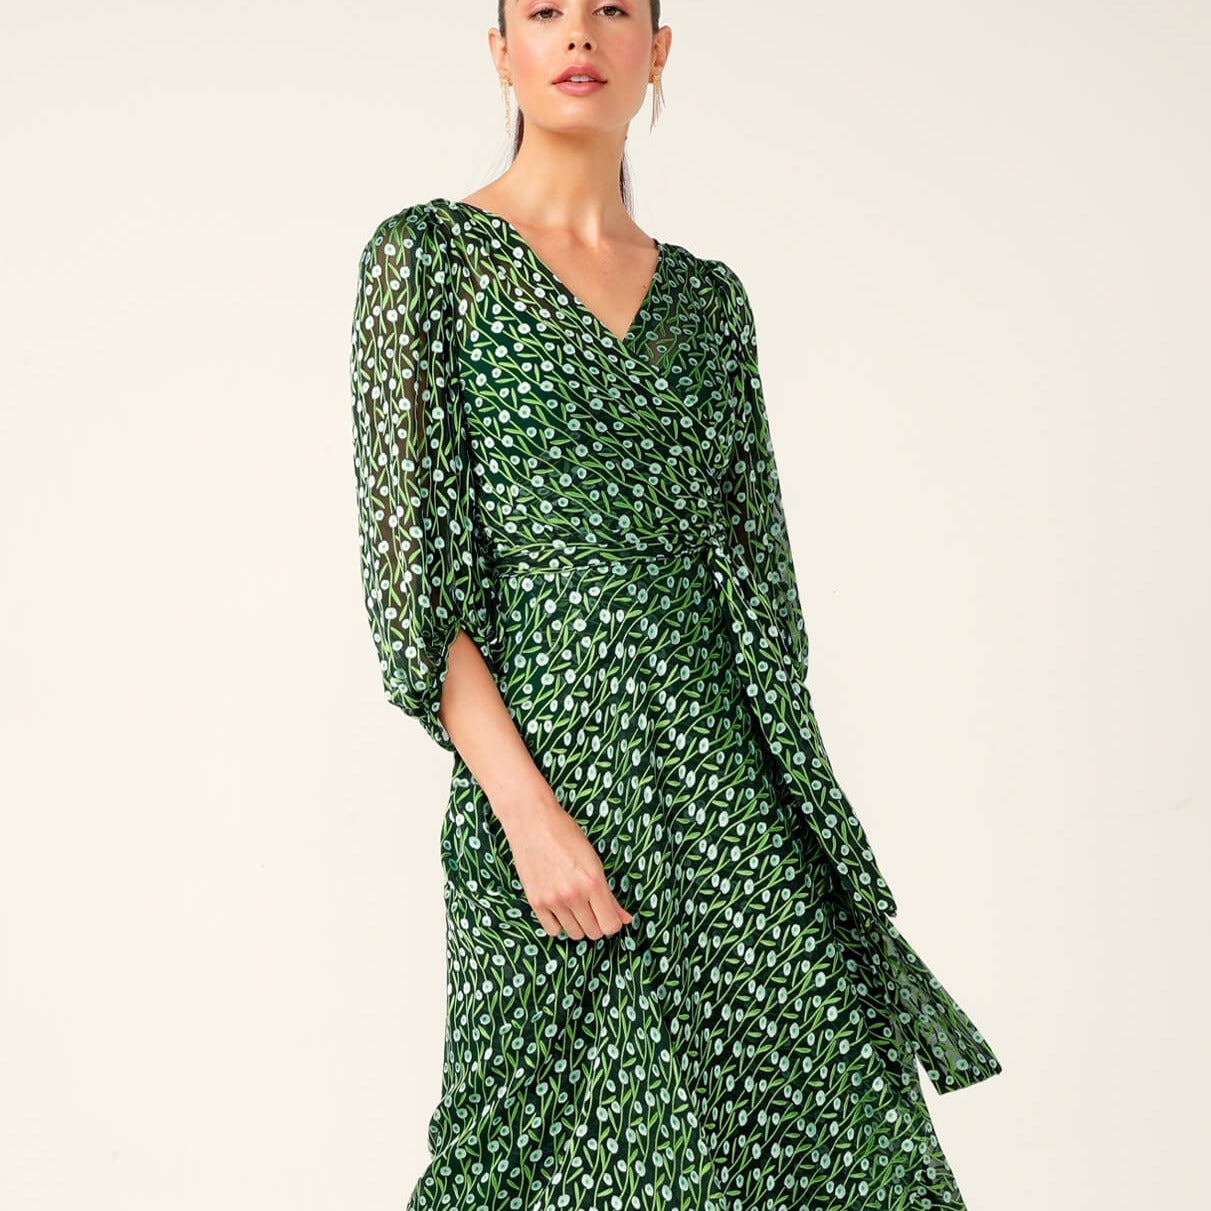 Wonderland Midi Wrap Dress - Emerald Poppy